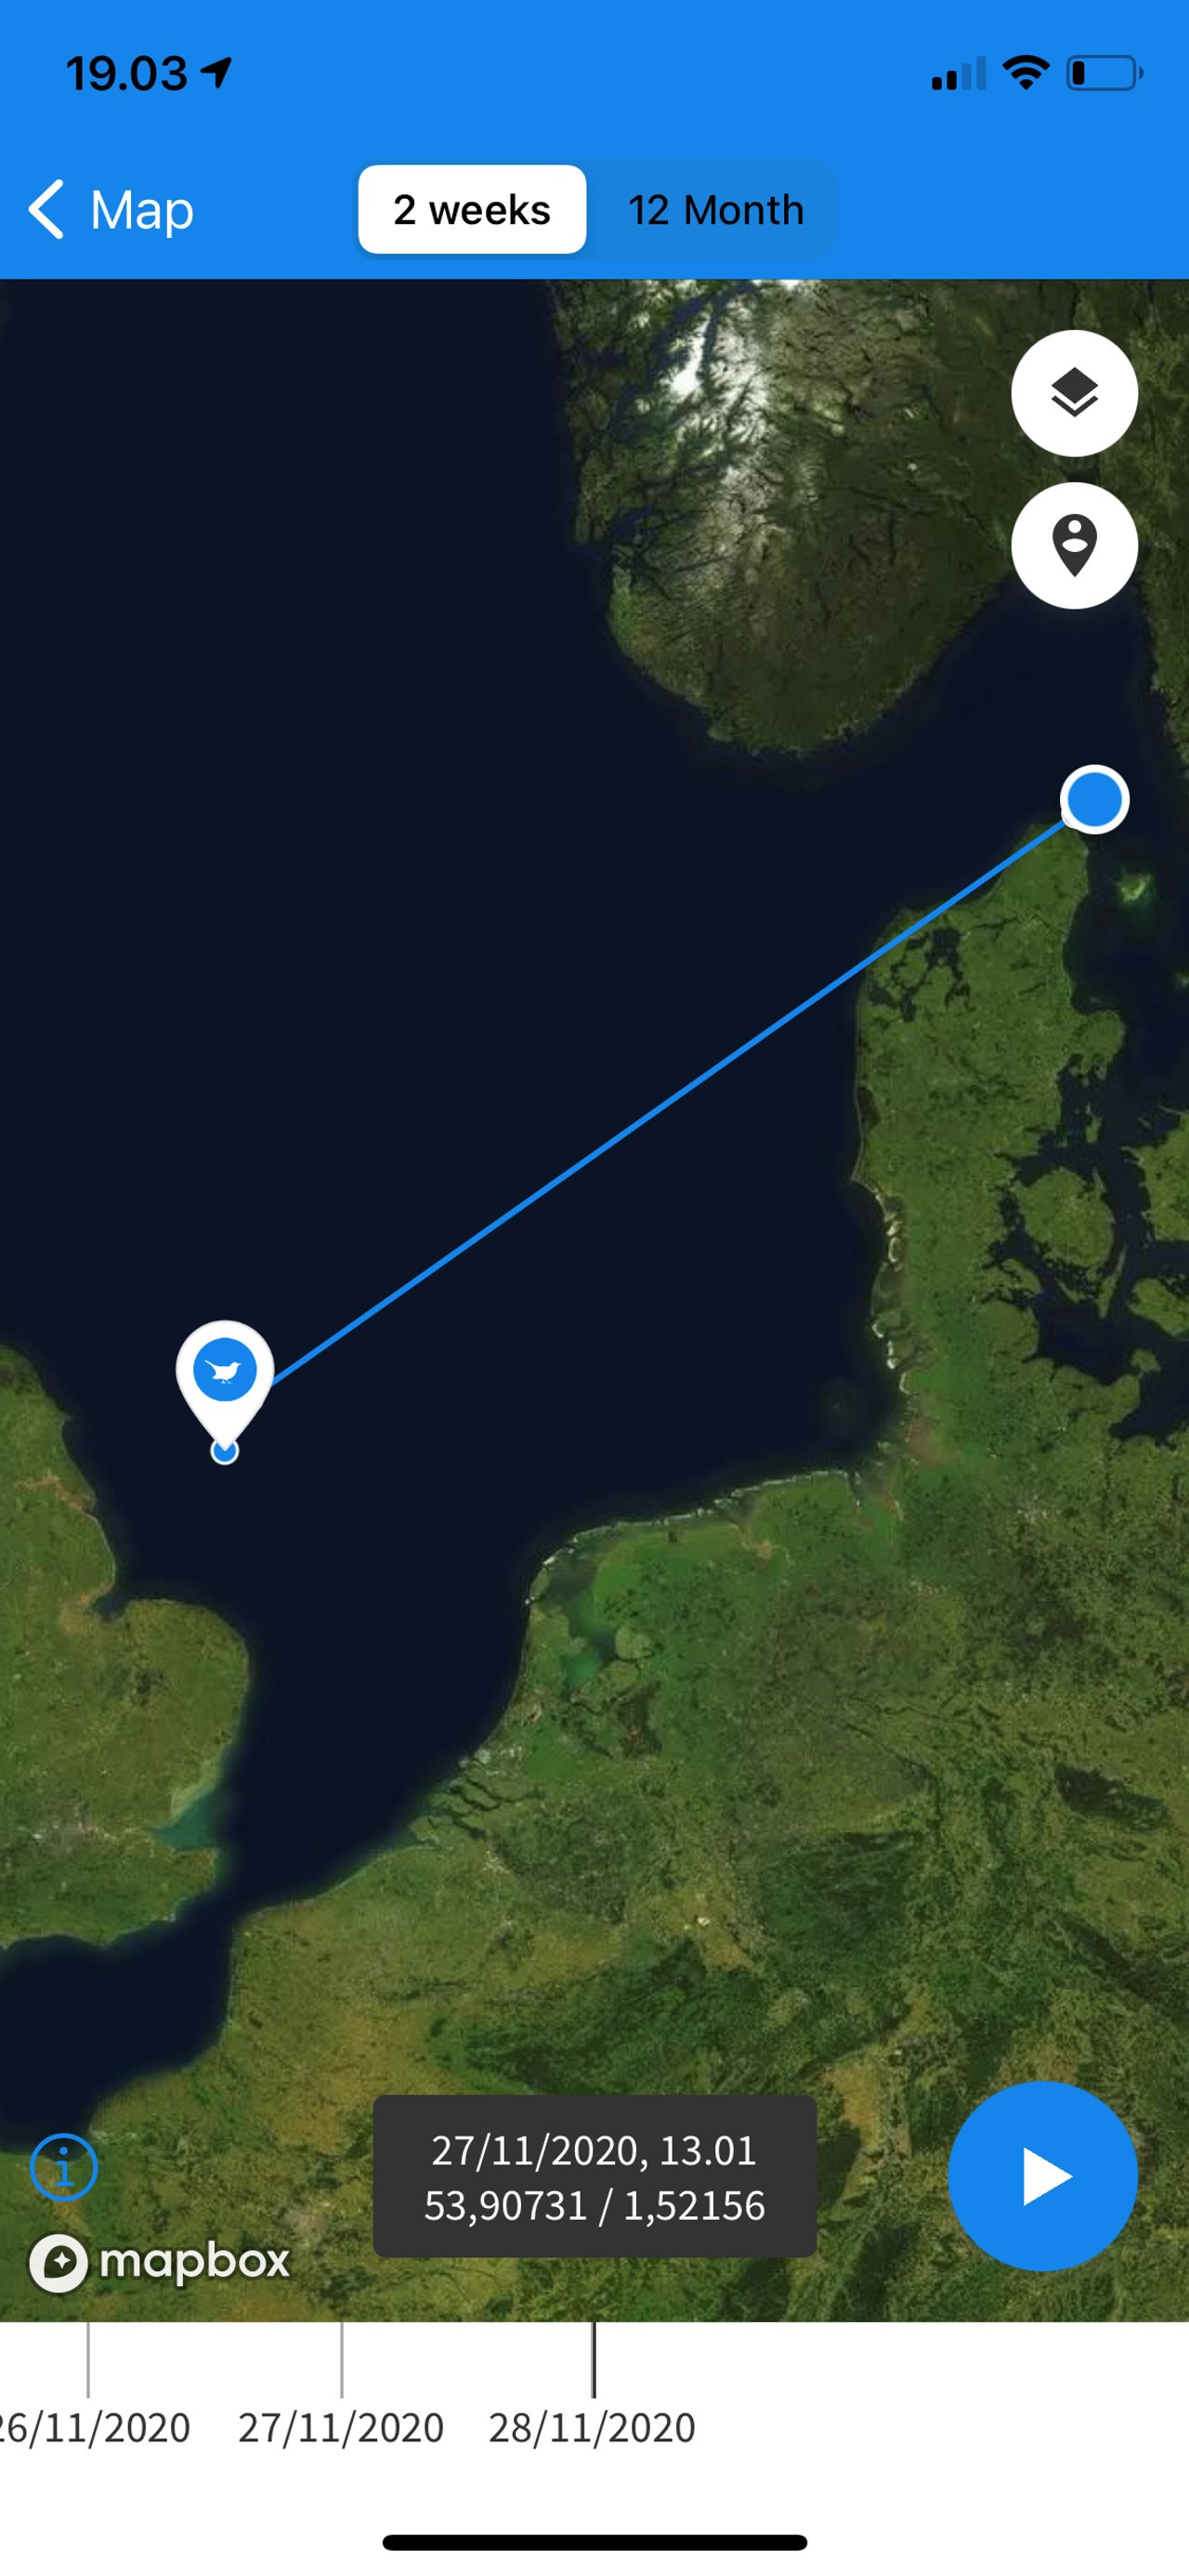 Solsort ringmaerket i Skagen floj over Nordsoen mod England